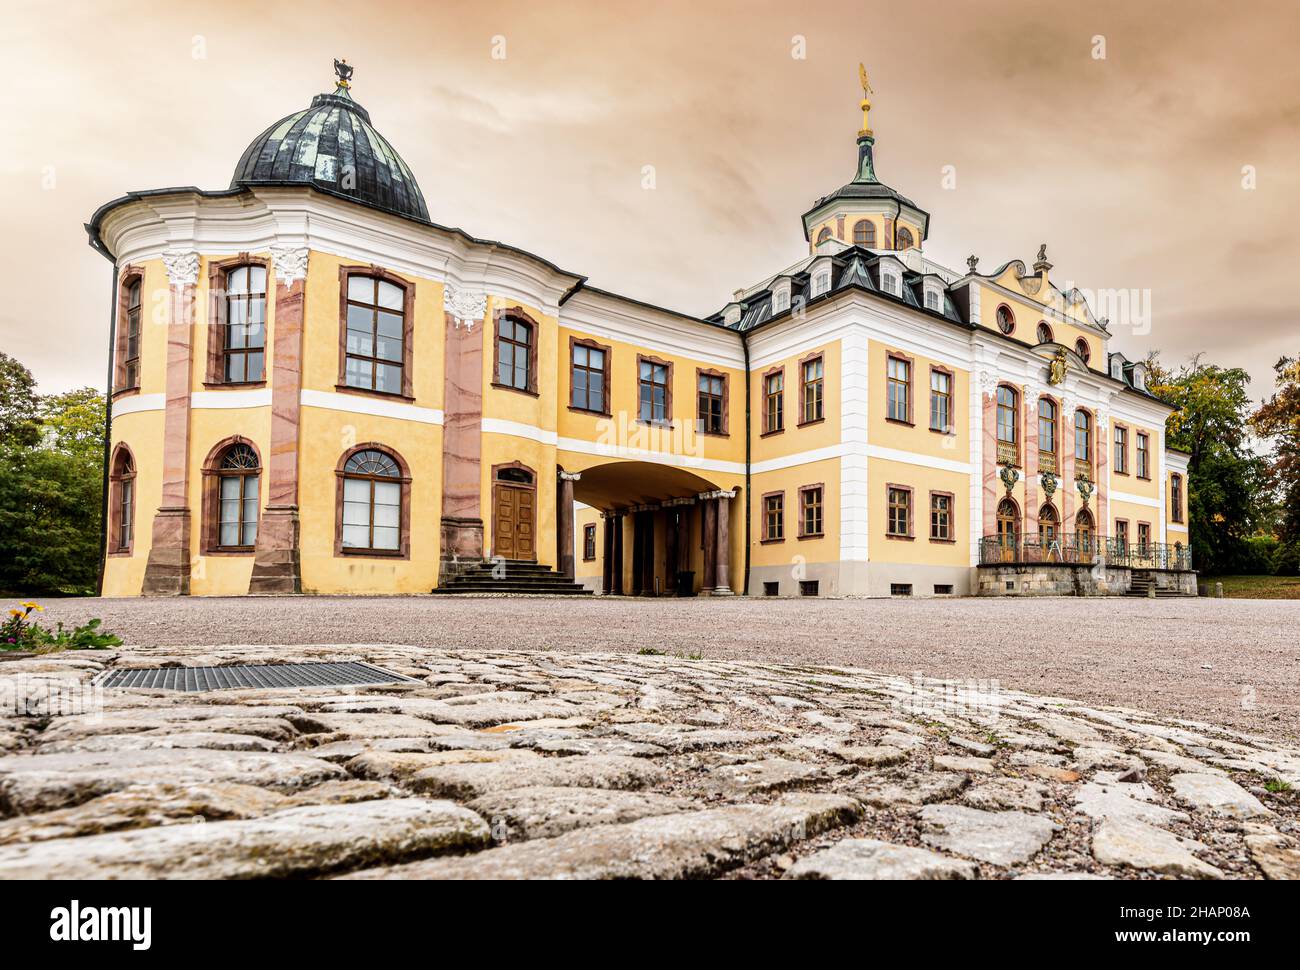 Schloss Belvedere in Weimar, Thuringia, Germany. Stock Photo